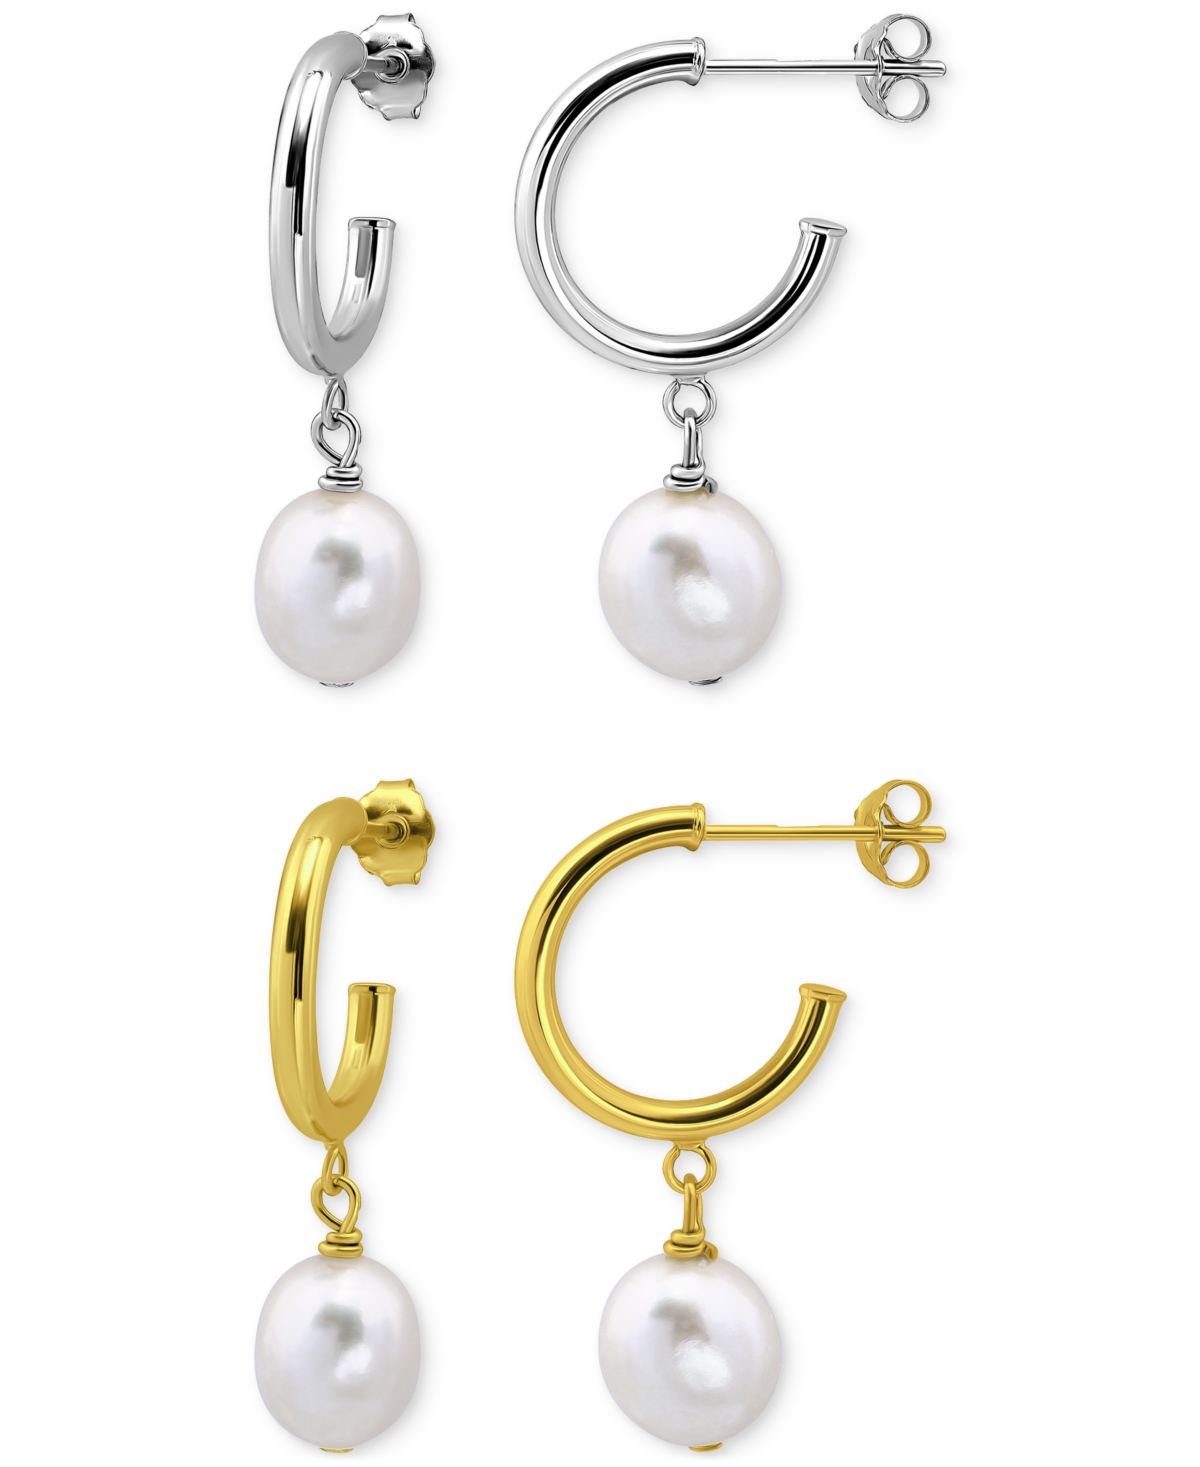 2-Pc. Set Cultured Freshwater Pearl (10 x 8mm) Dangle Hoop Earrings in Sterling Silver & 18k Gold-Plate - White